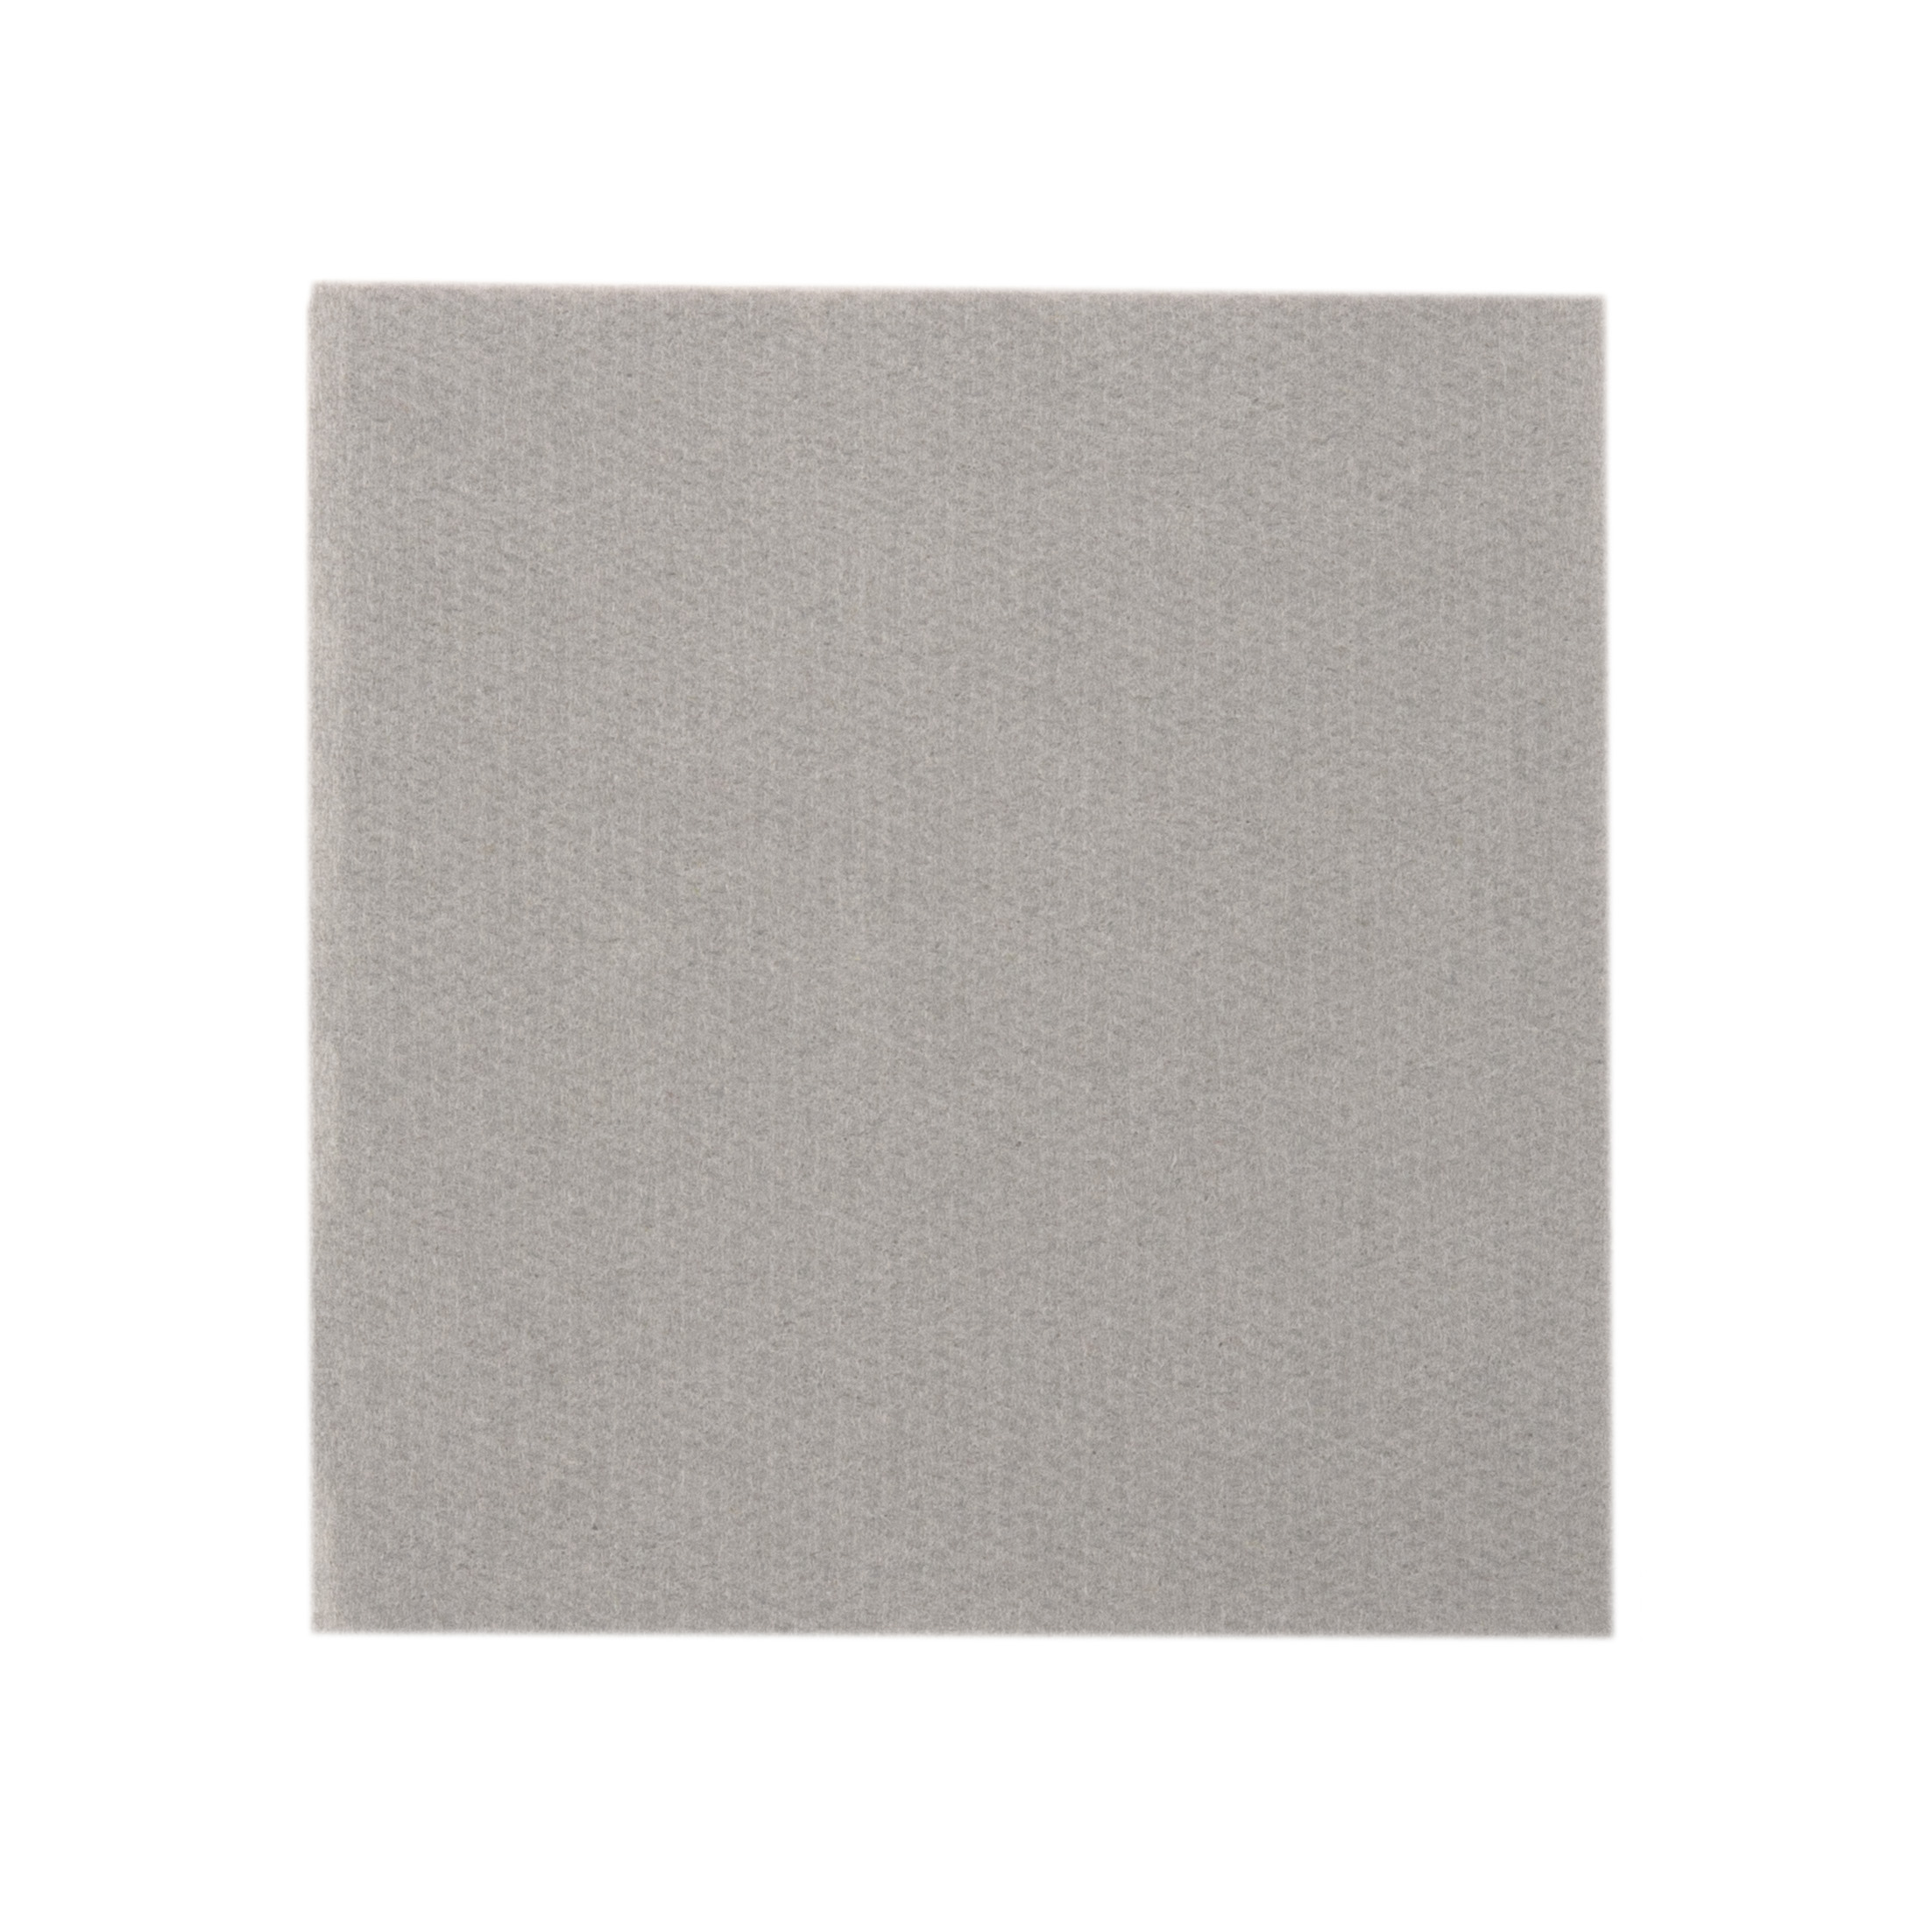 Mank Serviette Softpoint 1/4 Falz, 20 x 20 cm, Basic grau